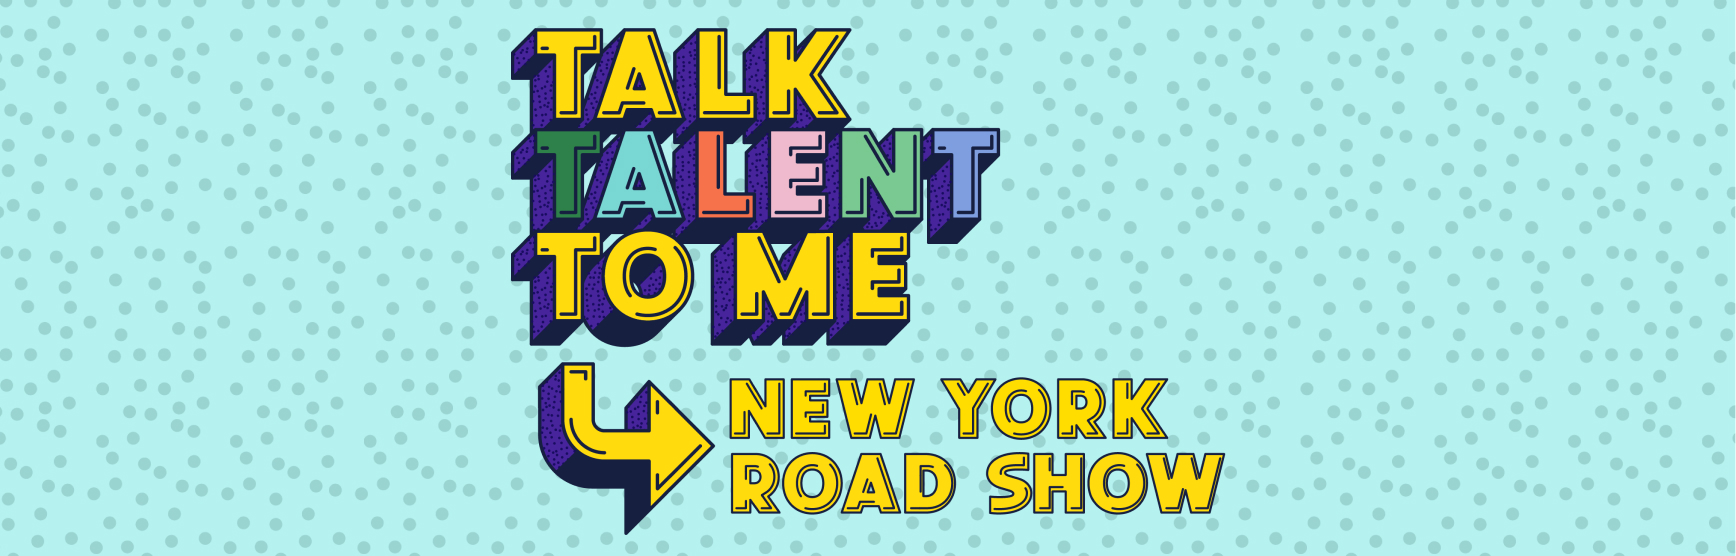 event-page-image-TTtM-RoadShow-NYC